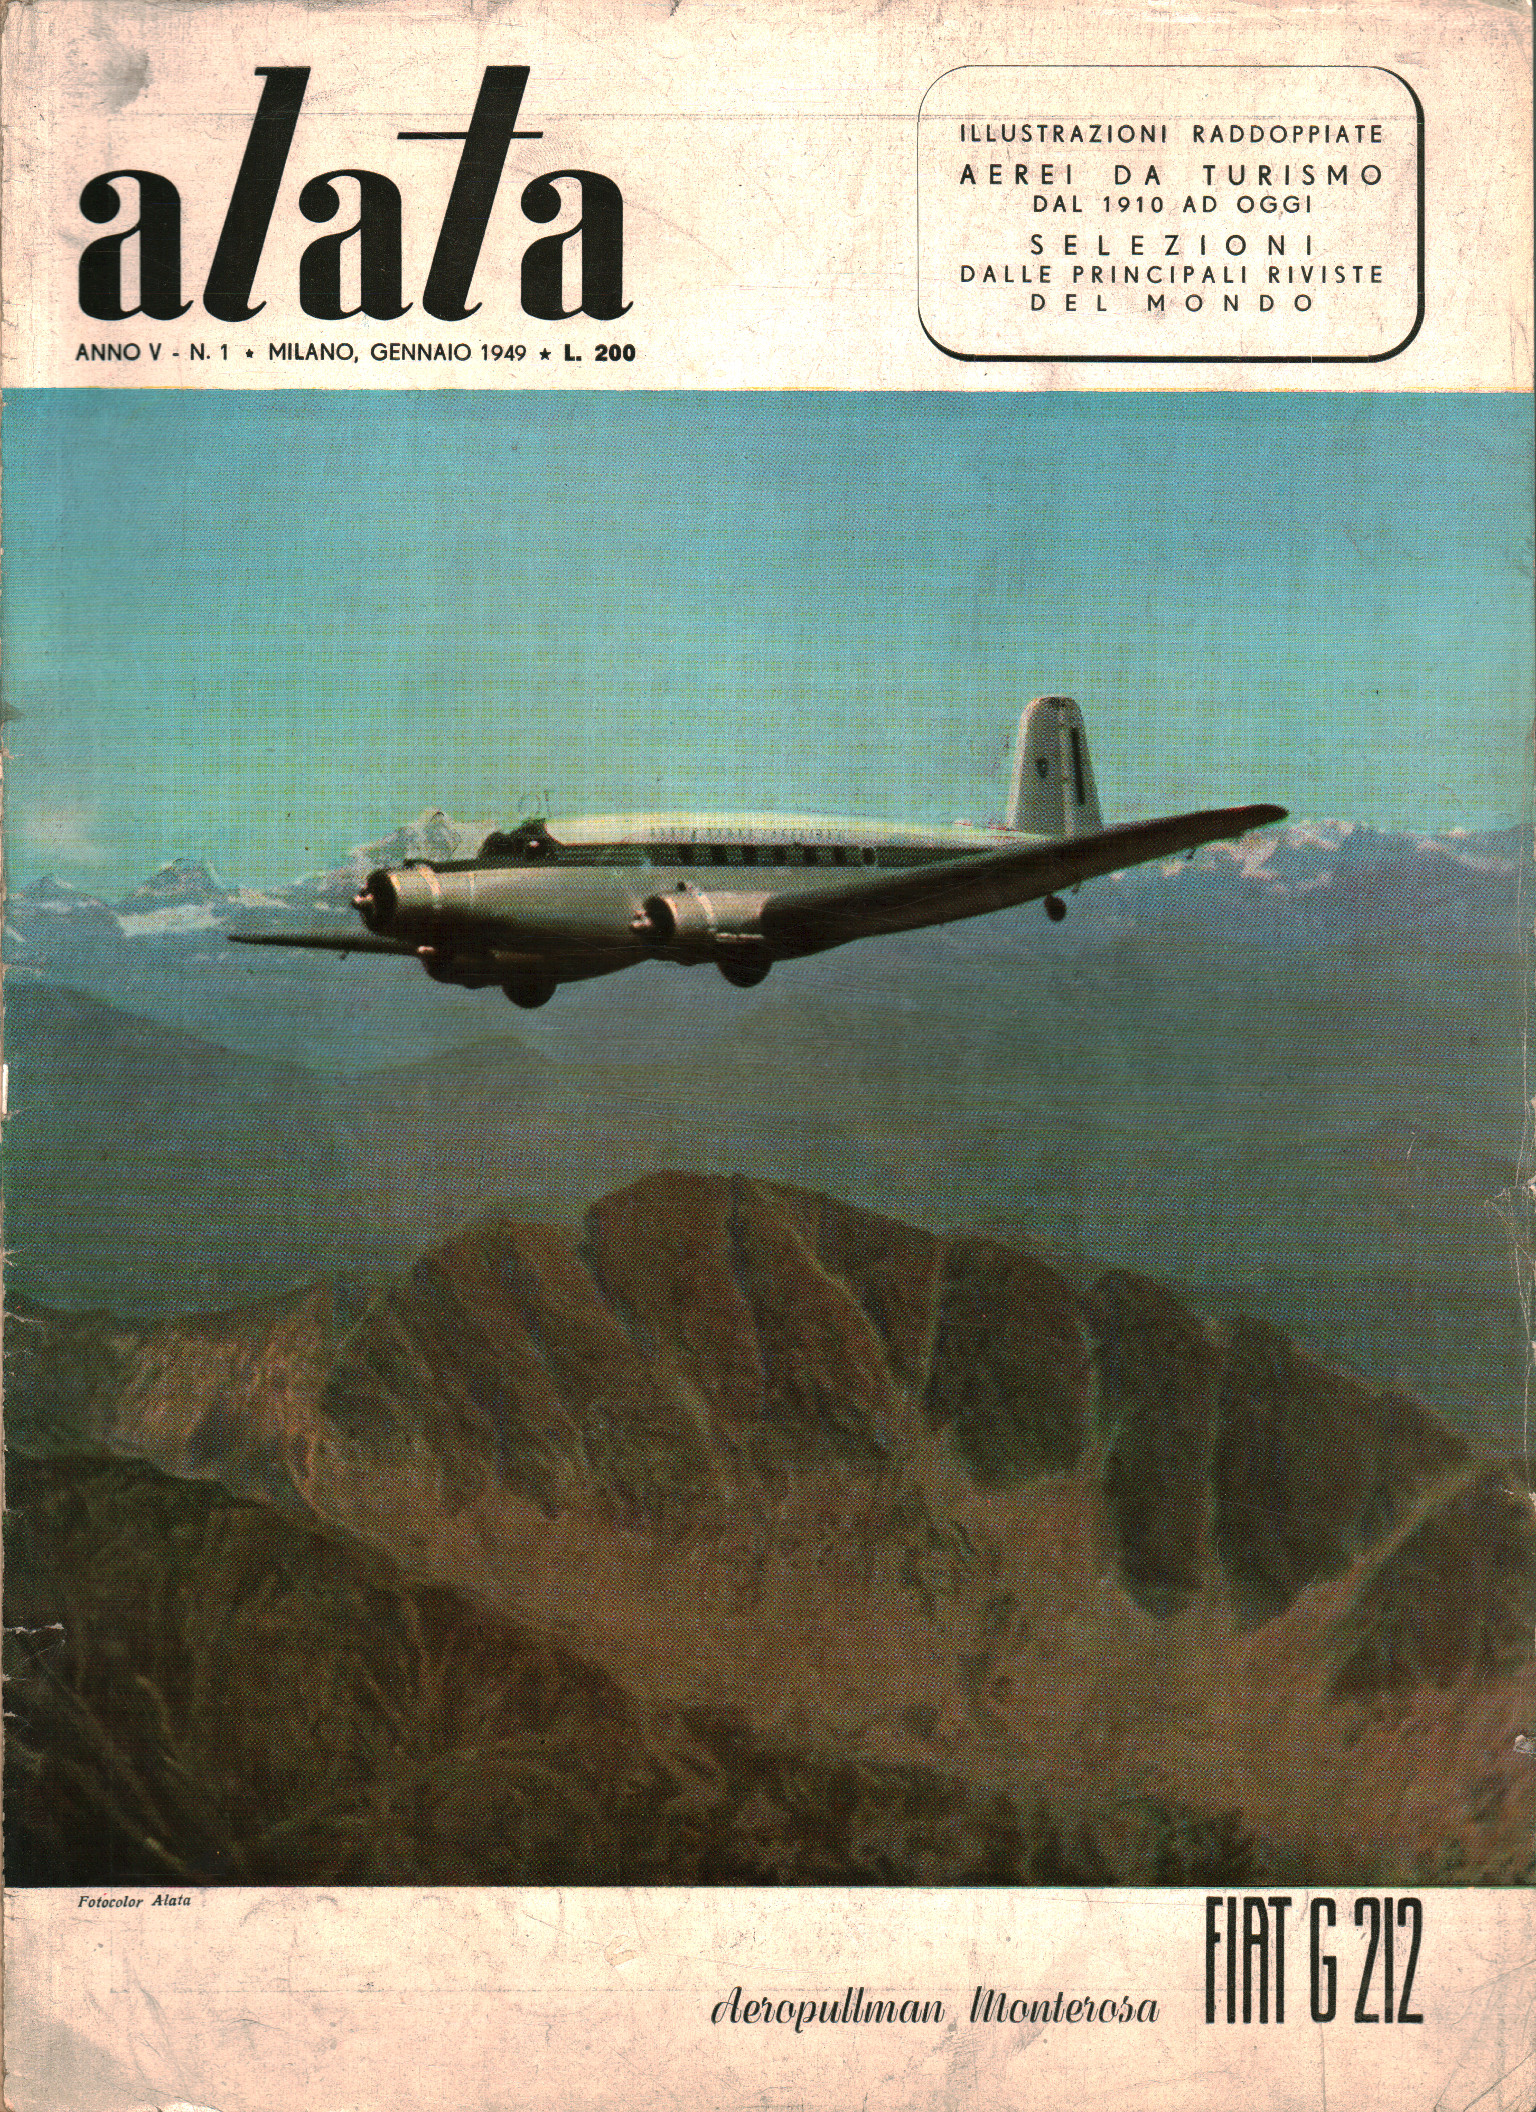 Winged. Year V (1949) nos. 1-7 (January-